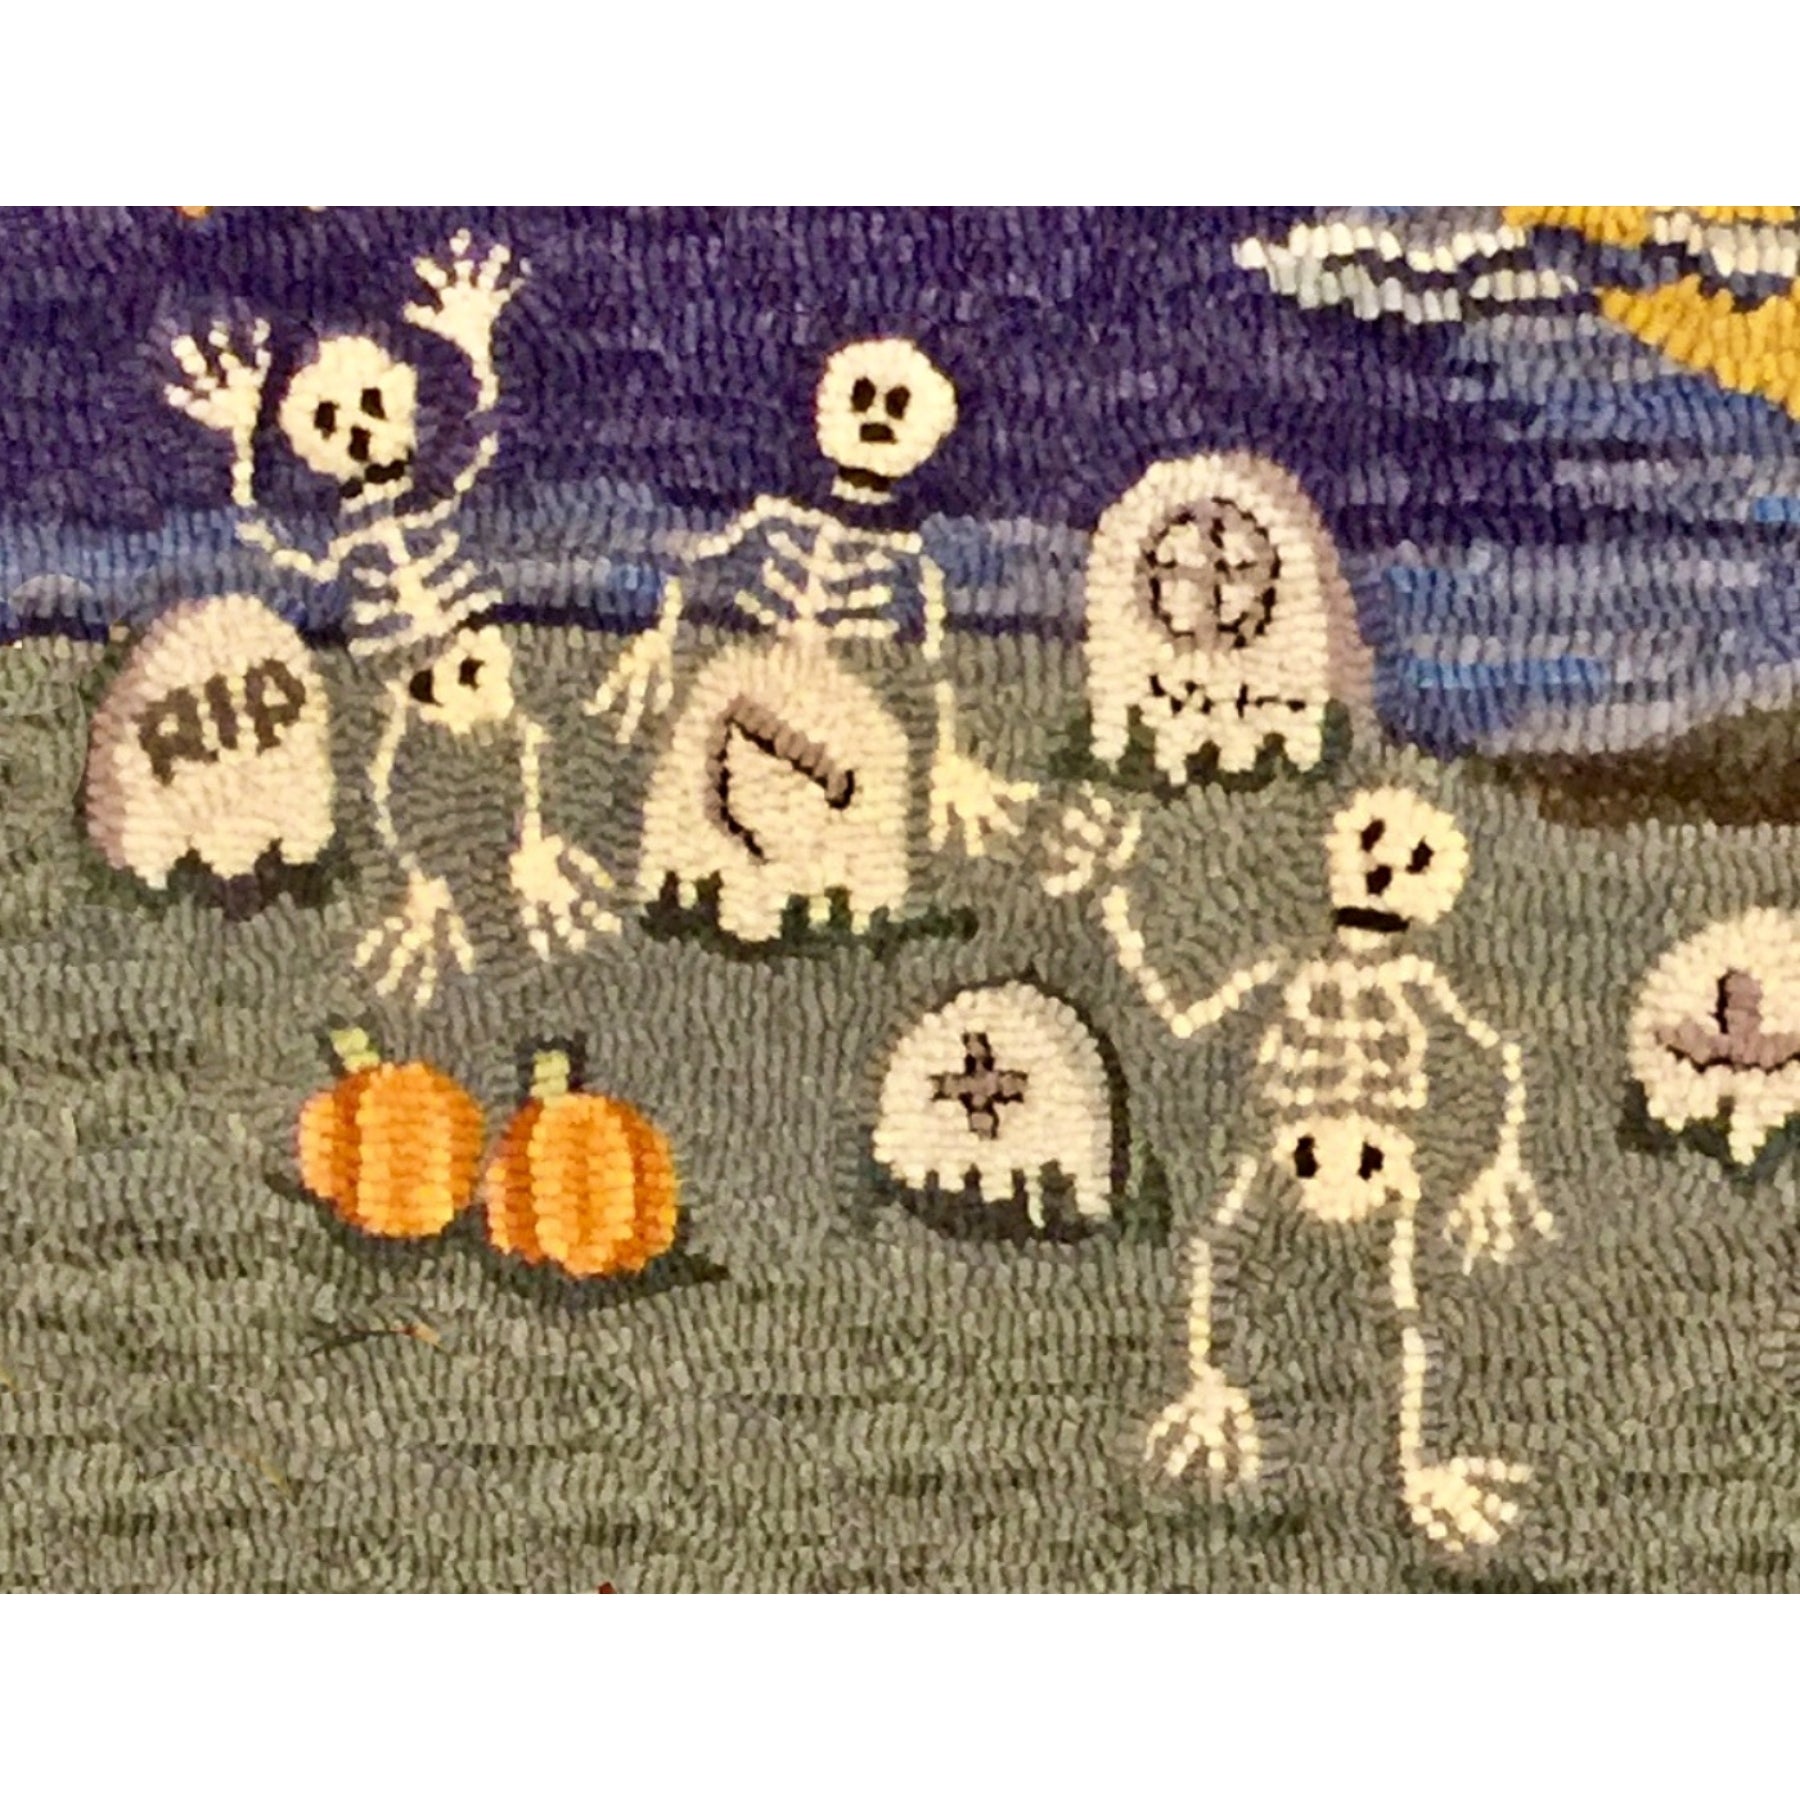 9 Jacks - Skeletons, rug hooked by Martha Lowry